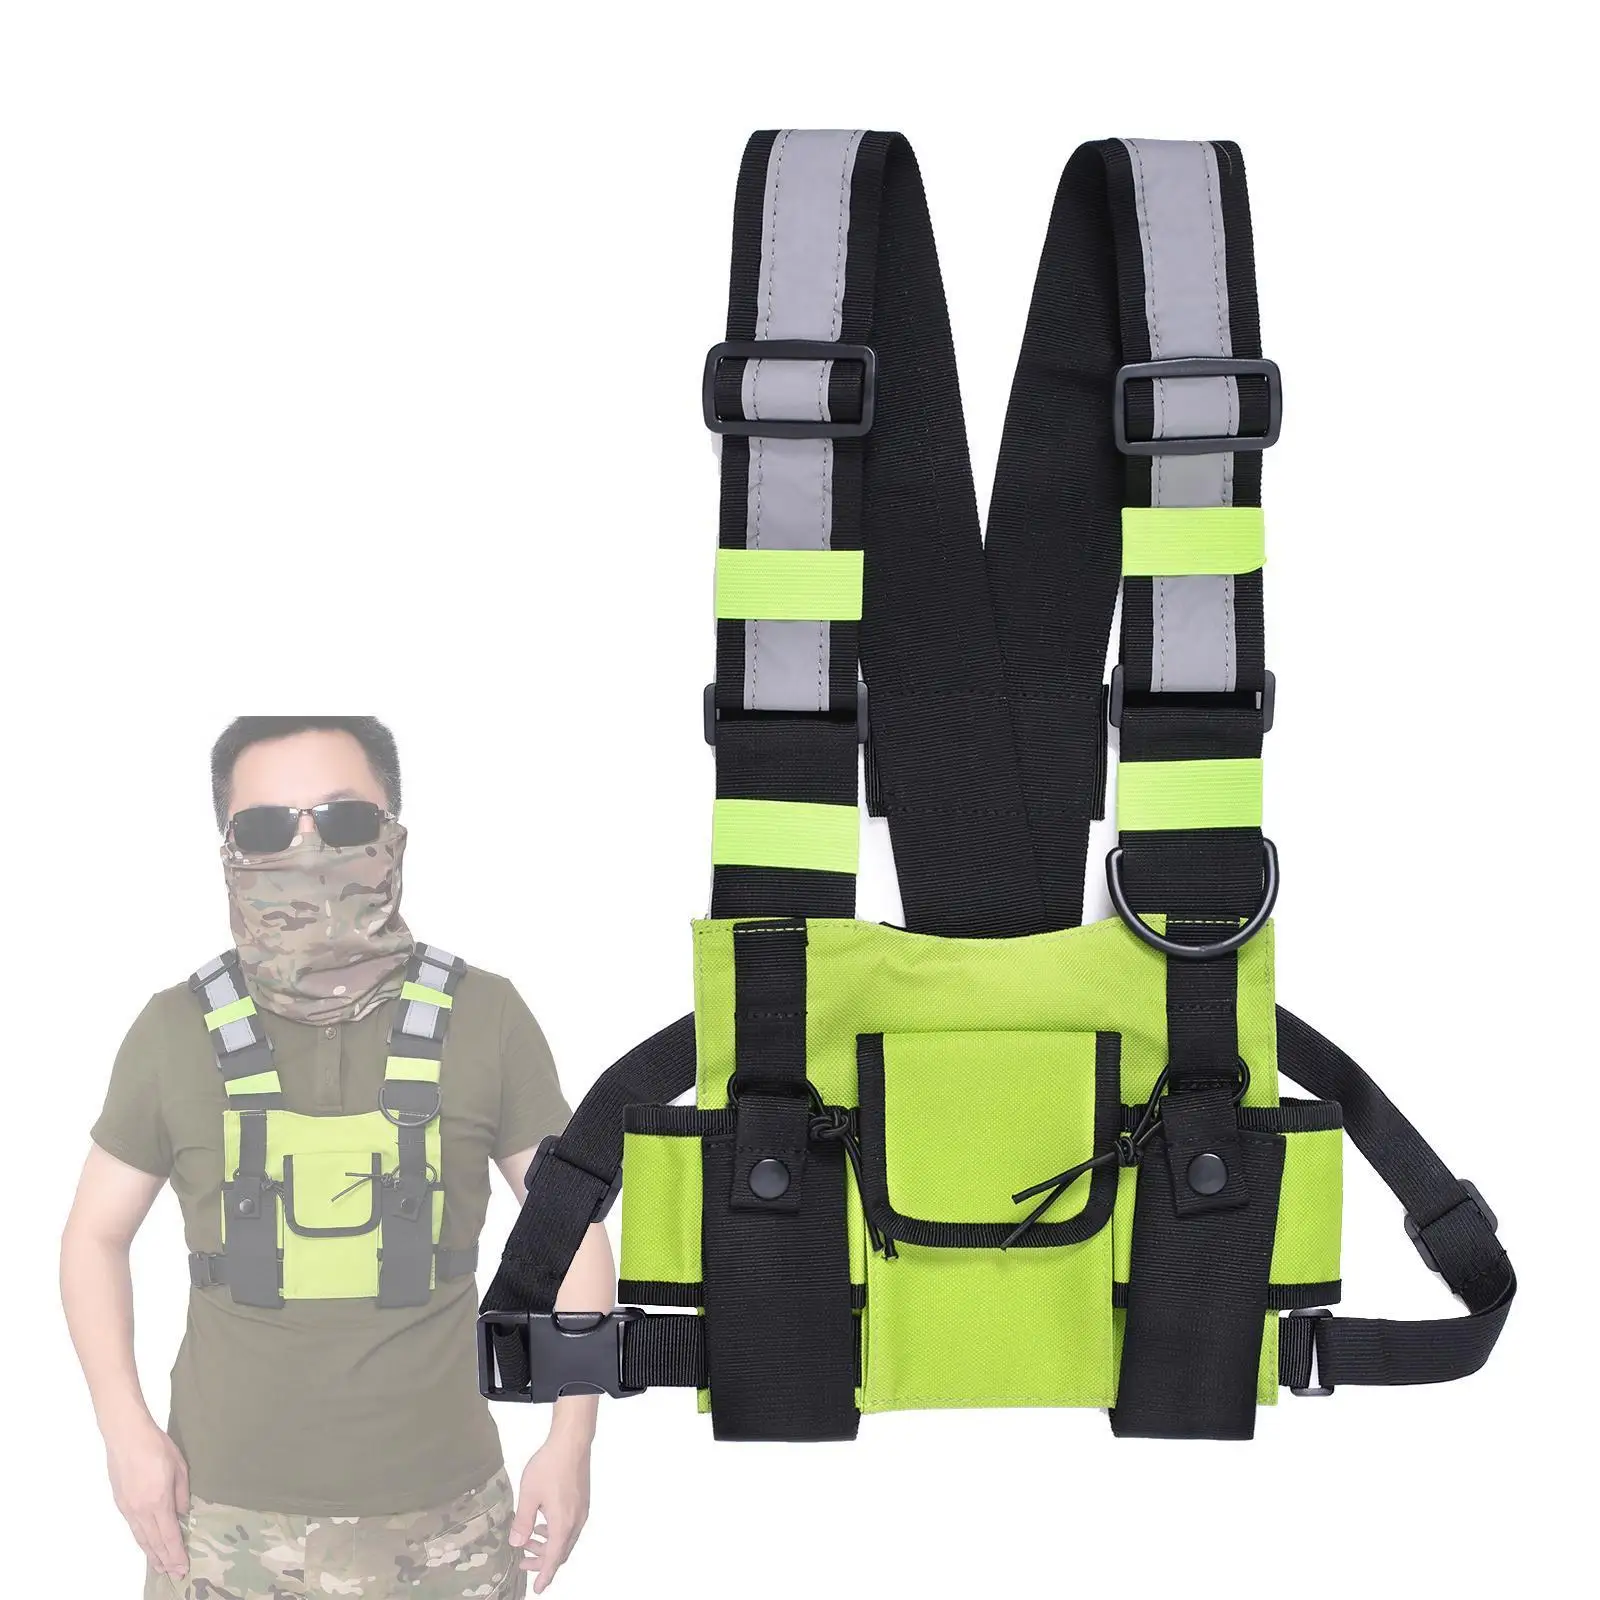 Chest Vest Bag for Men Women Fashion Chest Rig Bag Pack Harness Lightweight Bags for Men Women Running Exercise Hiking Camping